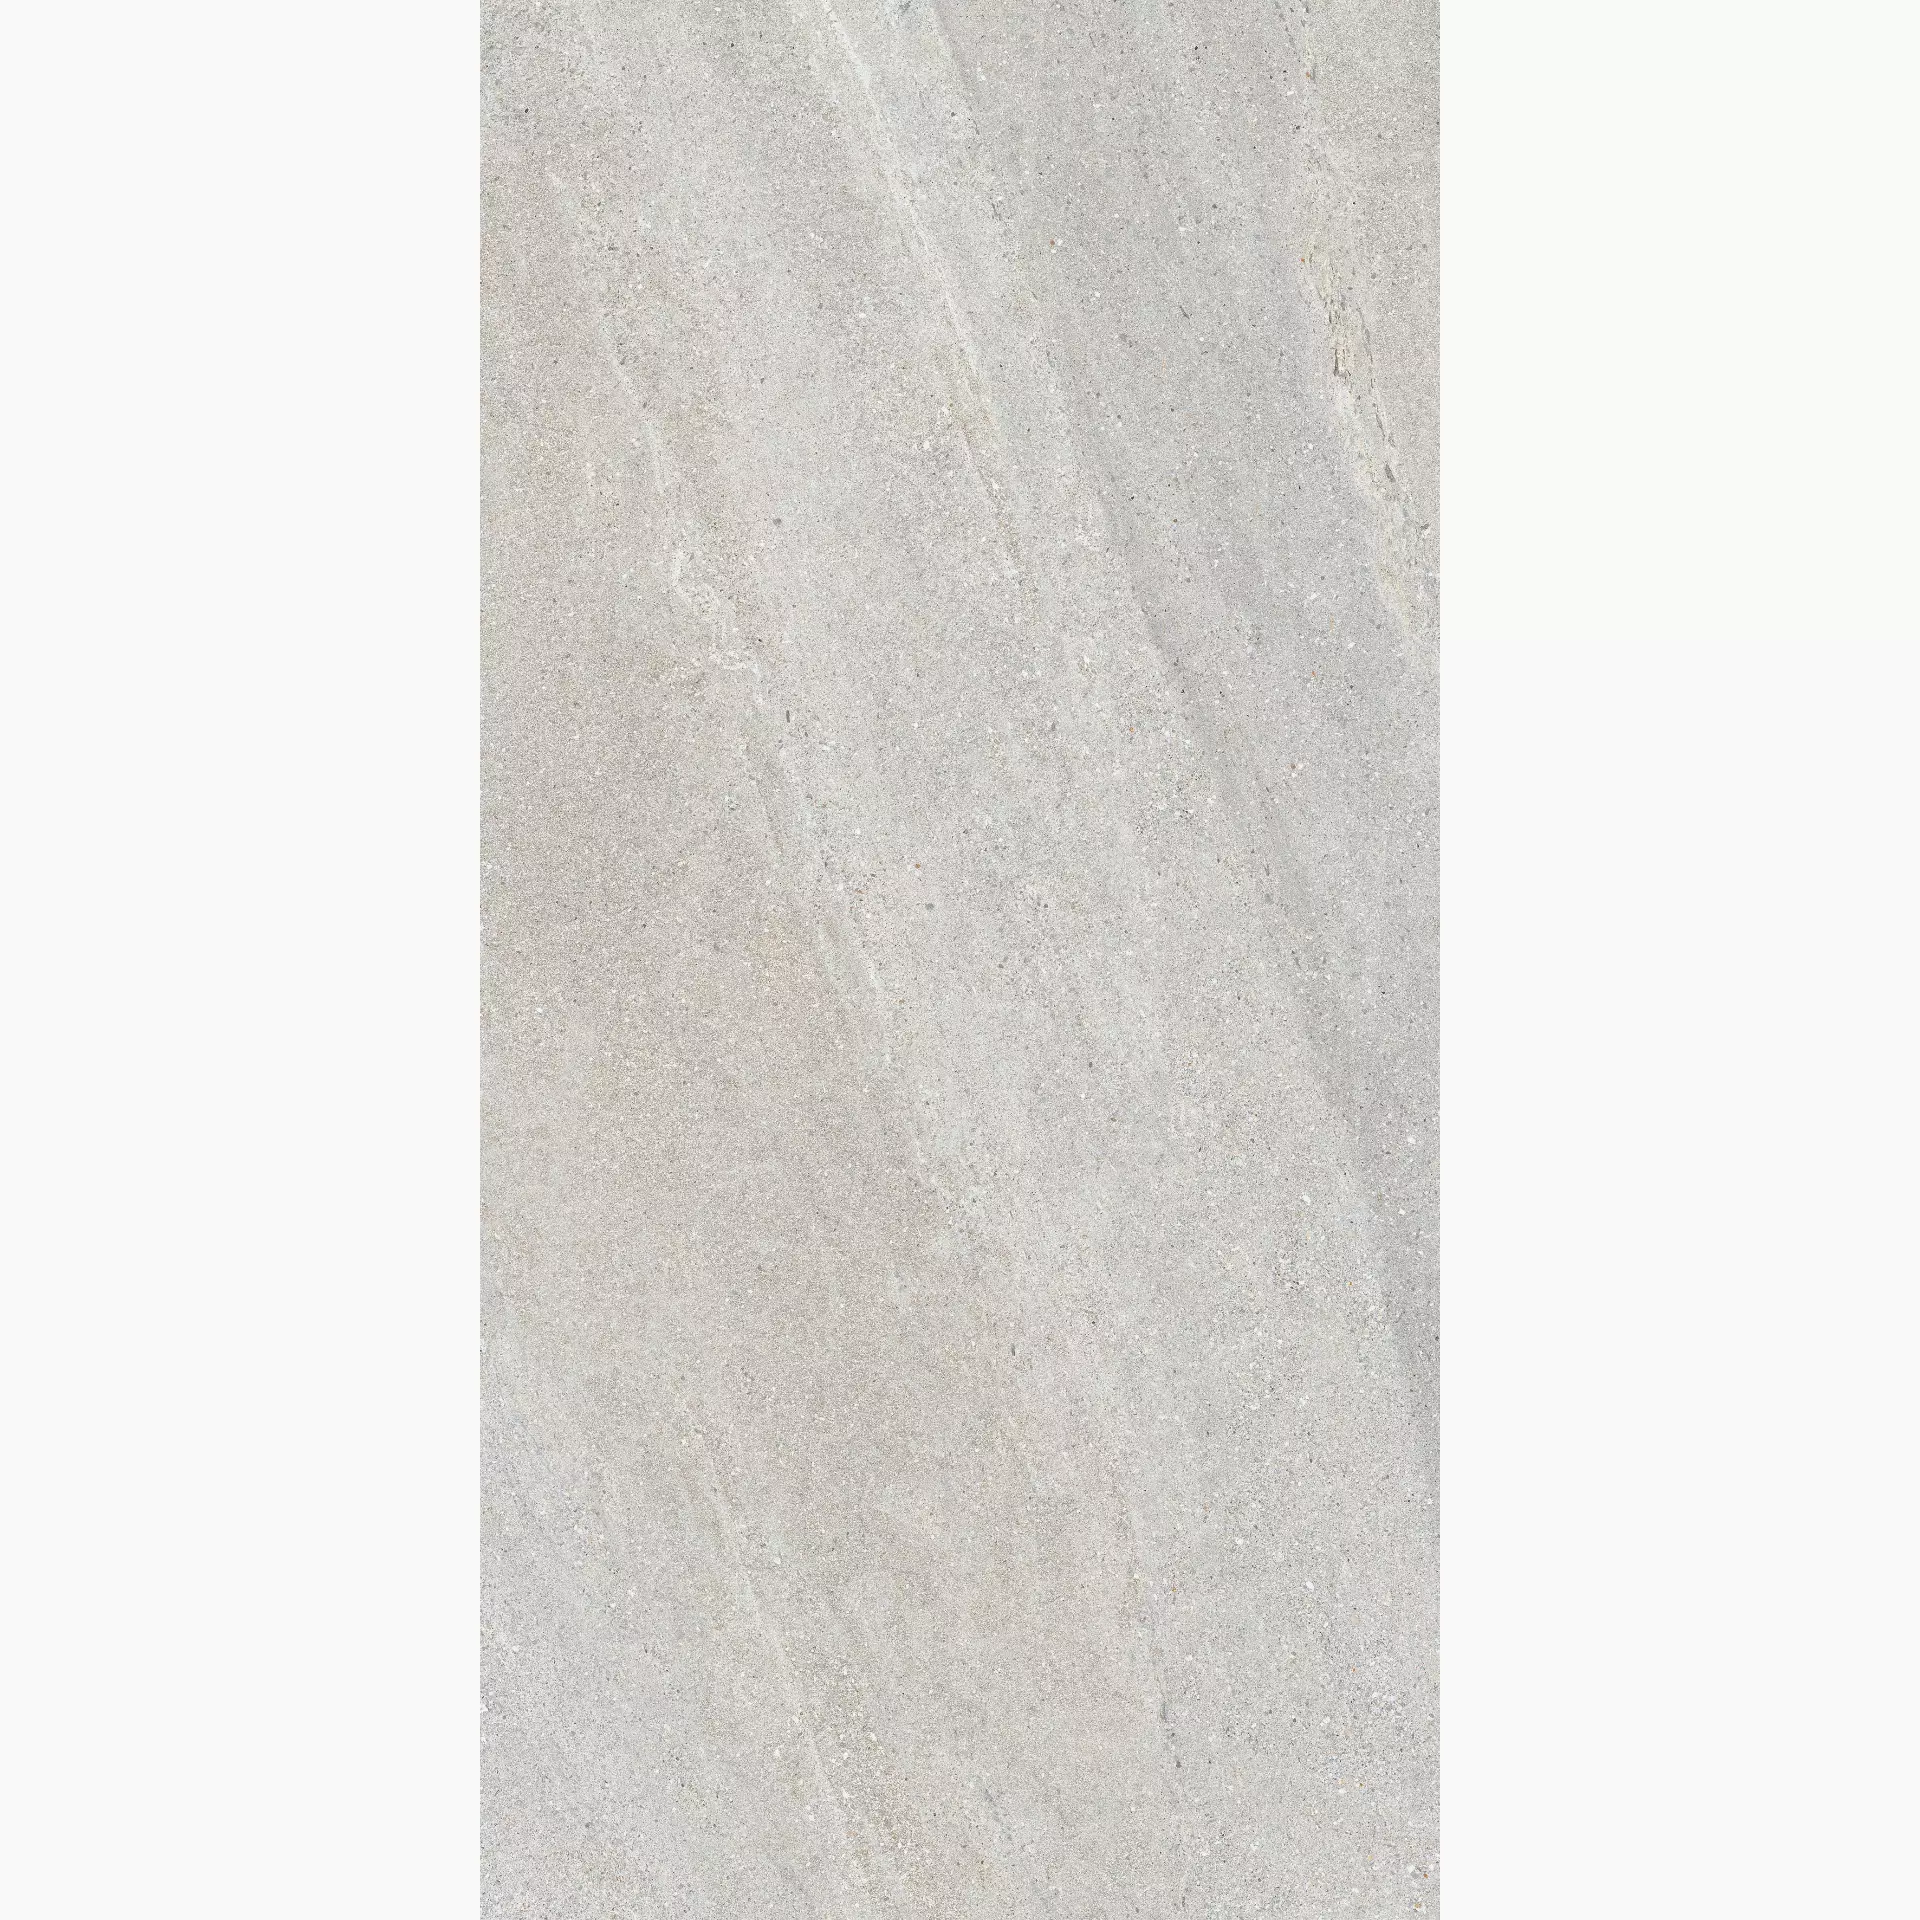 Flaviker Rockin Ice Grip PF60010141 60x120cm rectified 8,5mm